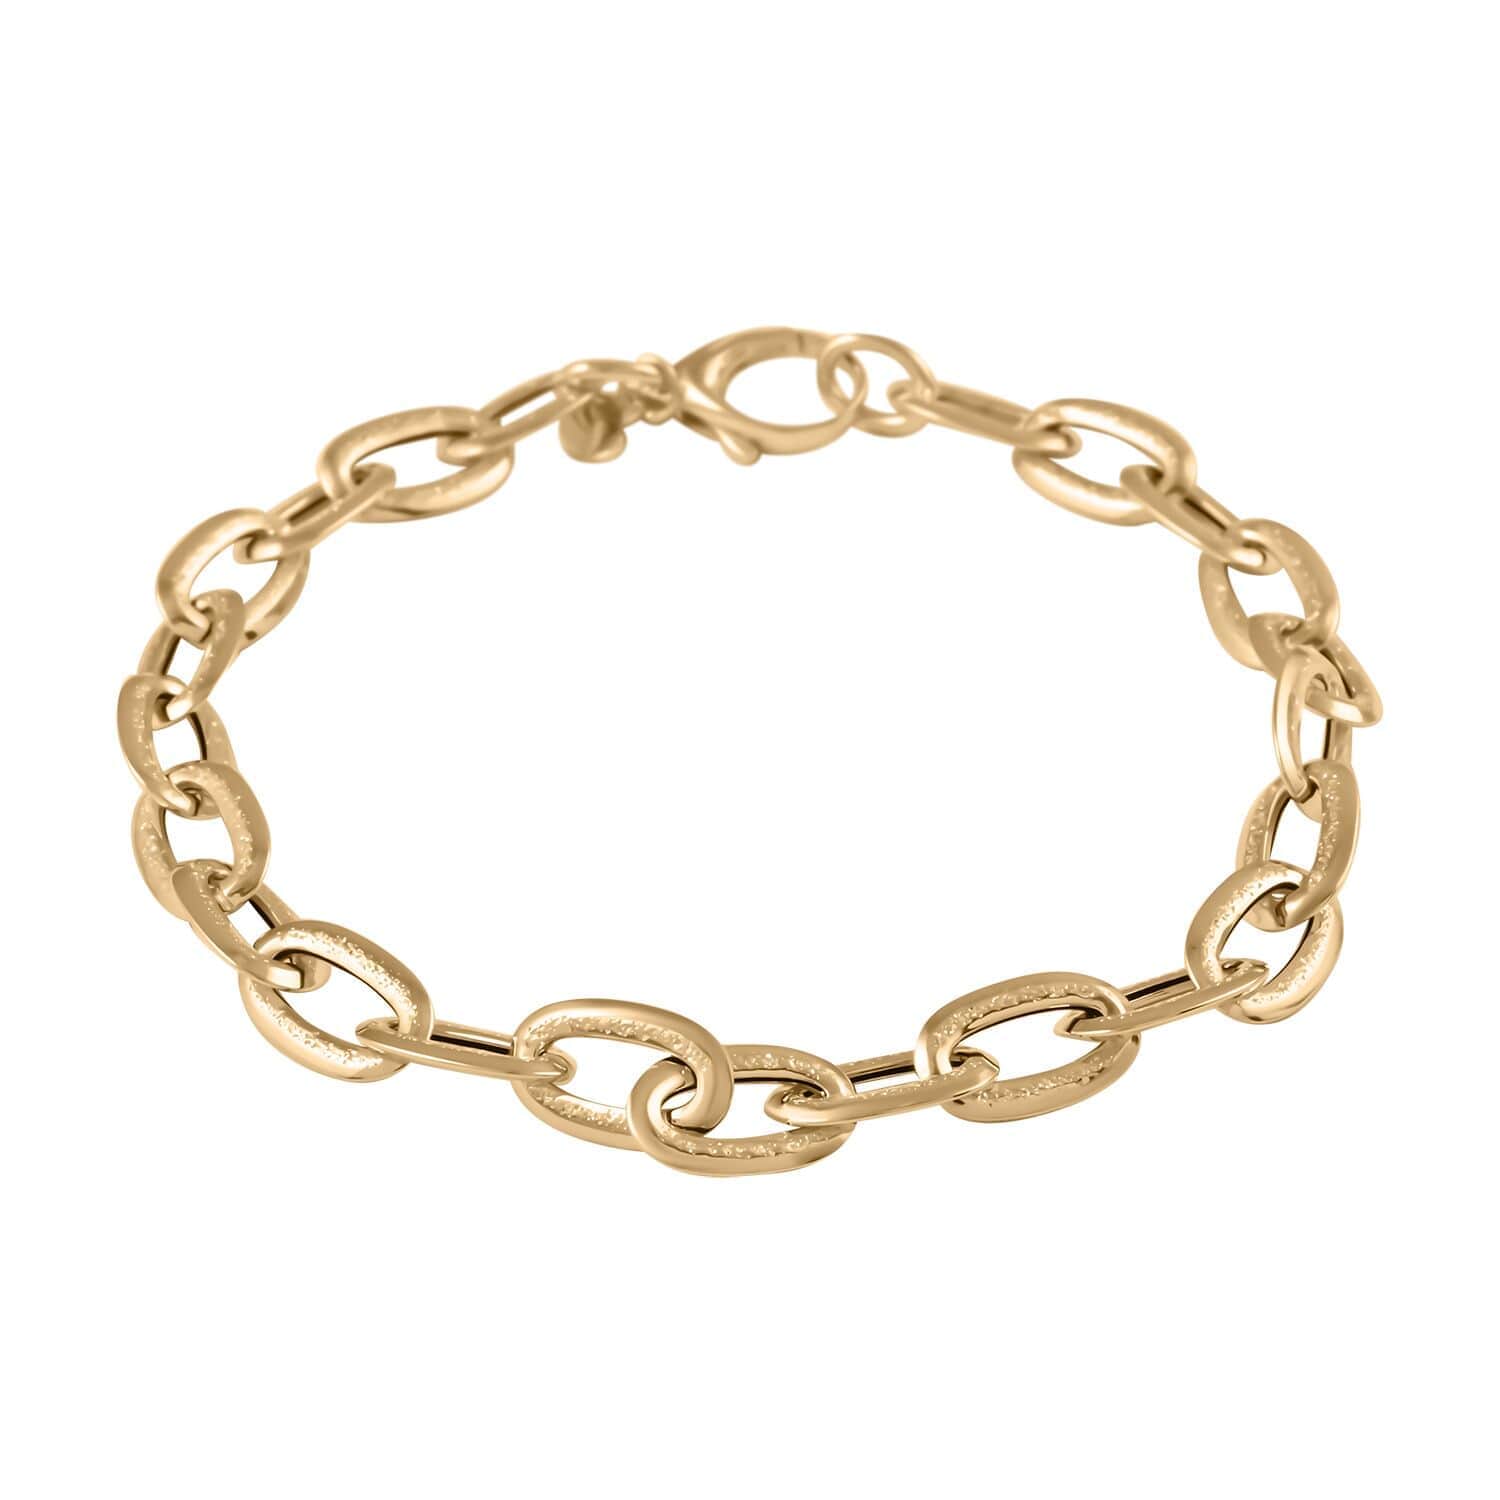 Floreo 7 Inch 10k Yellow Gold Solid Italian Figaro Chain Bracelet for Women  and Men 016 Inch 4mm  Amazonin Fashion